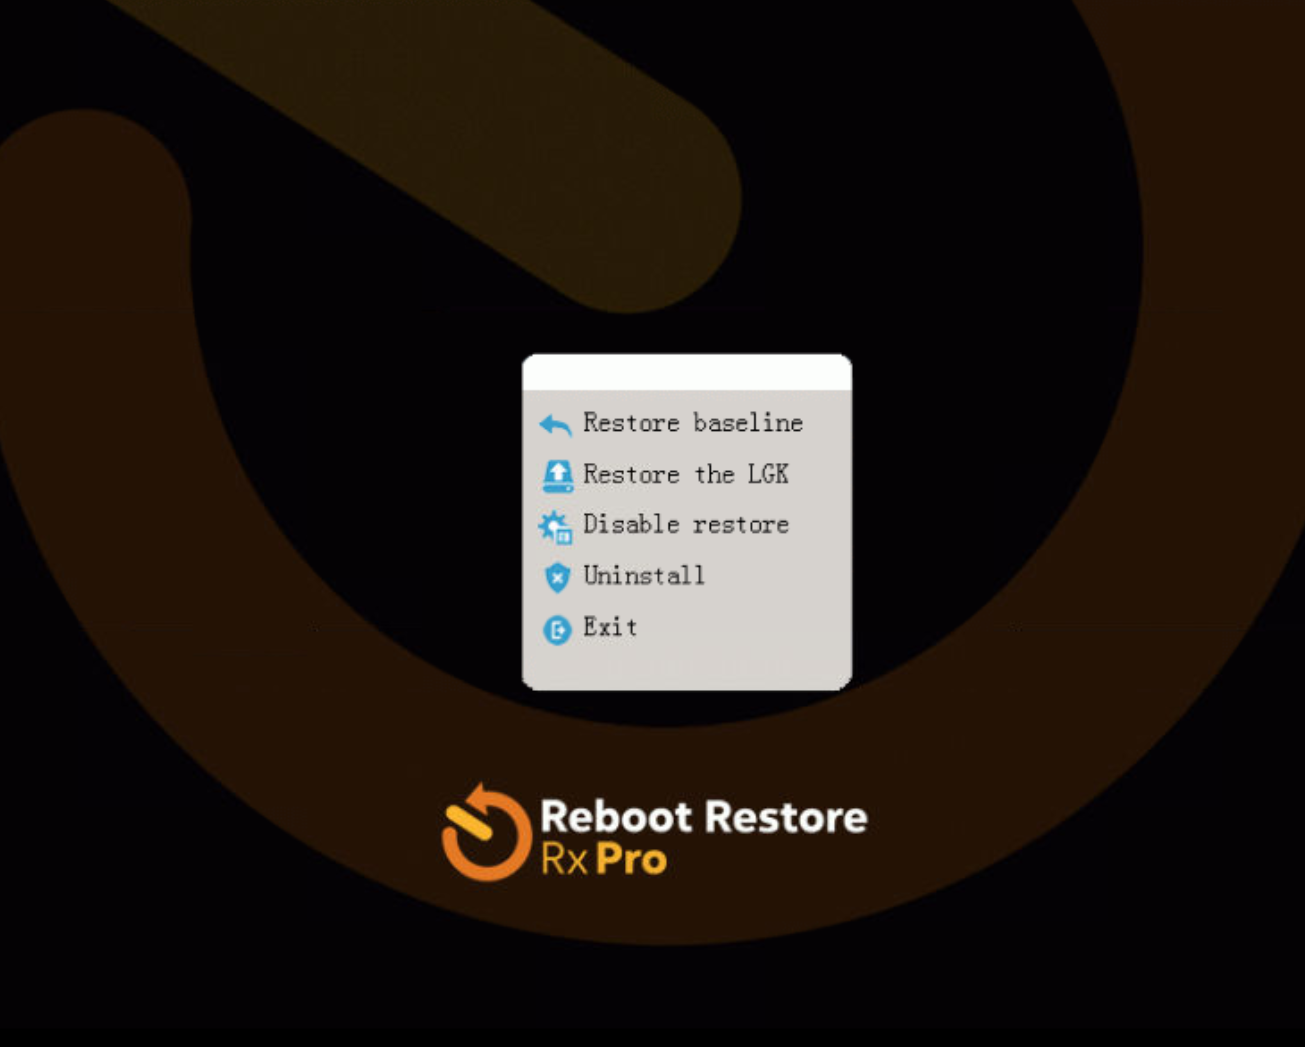 Reboot Restore Rx Pro 12.5.2708962800 downloading